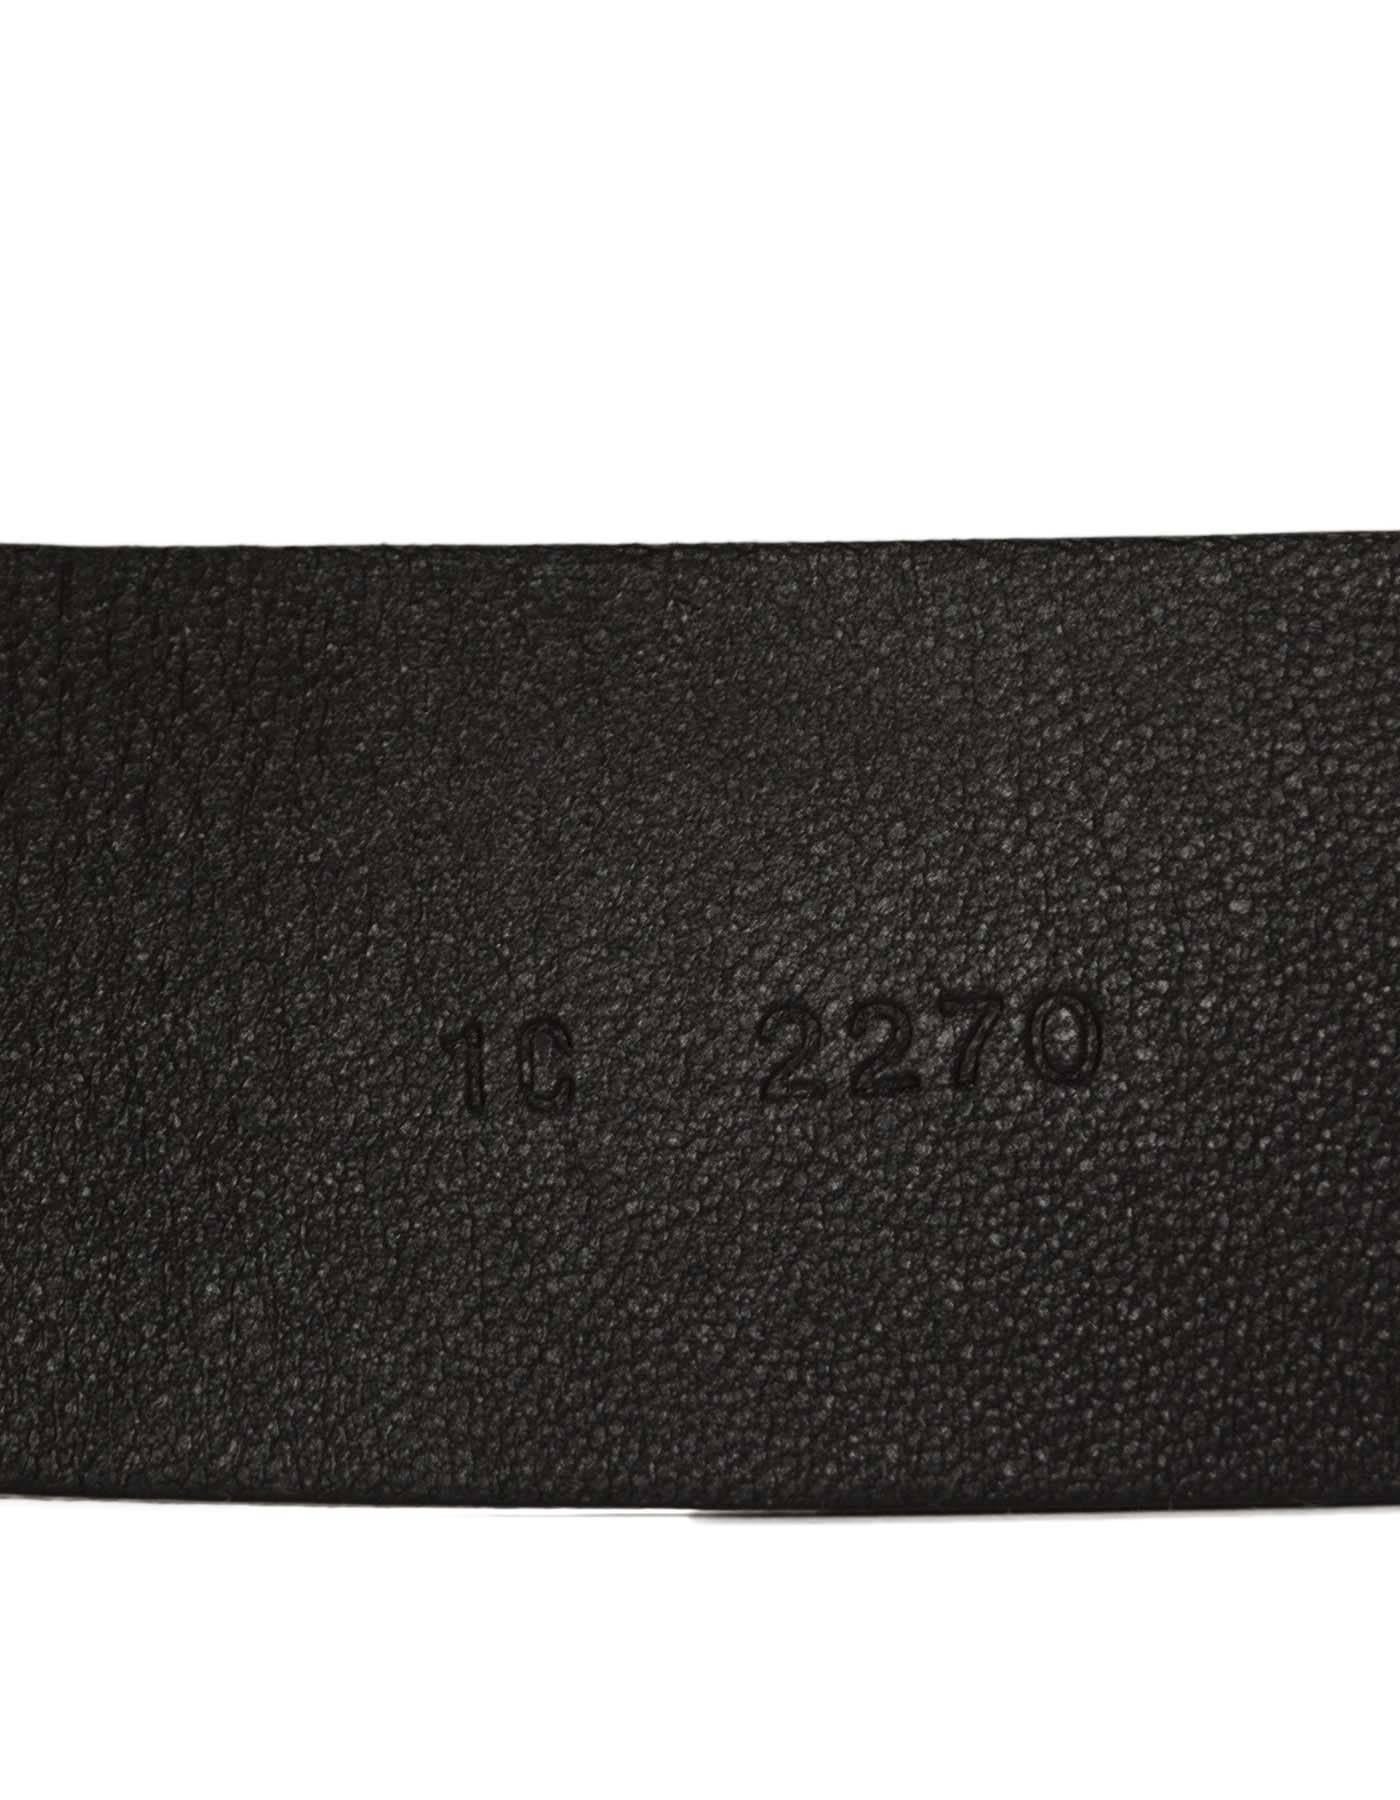 Prada Black Leather Belt sz 85 SHW 2